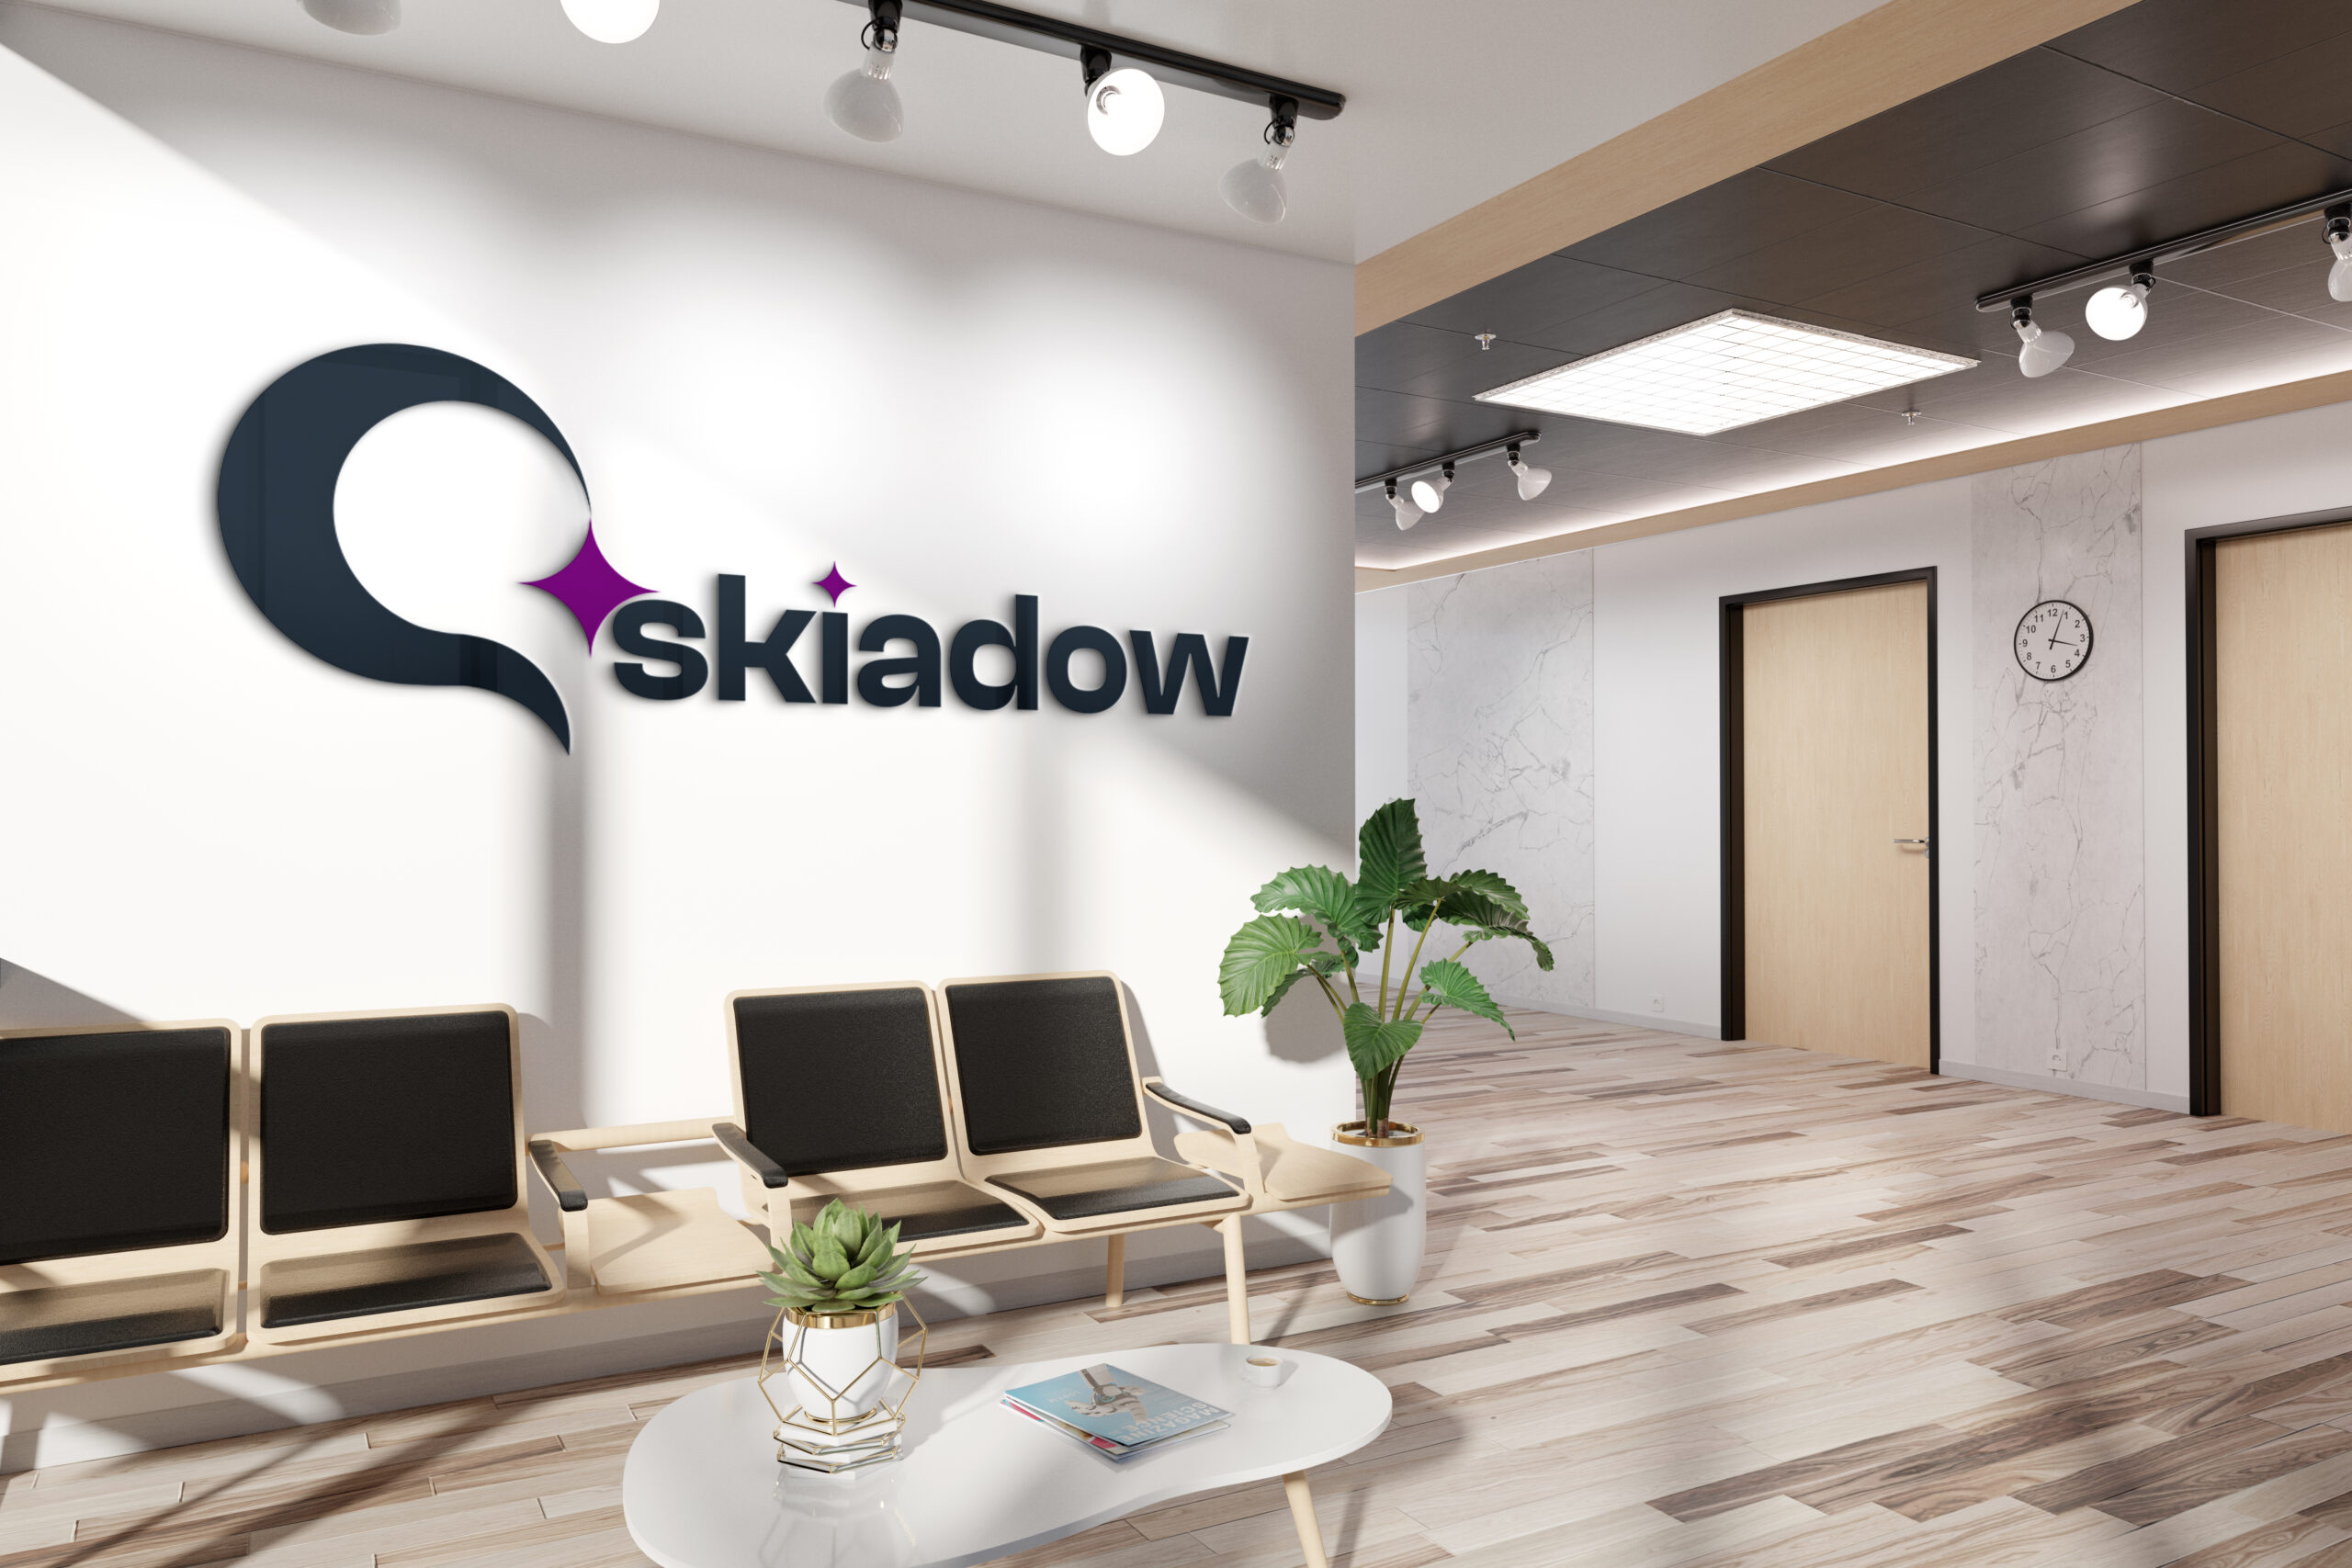 Skiadow's dynamic digital marketing agency office